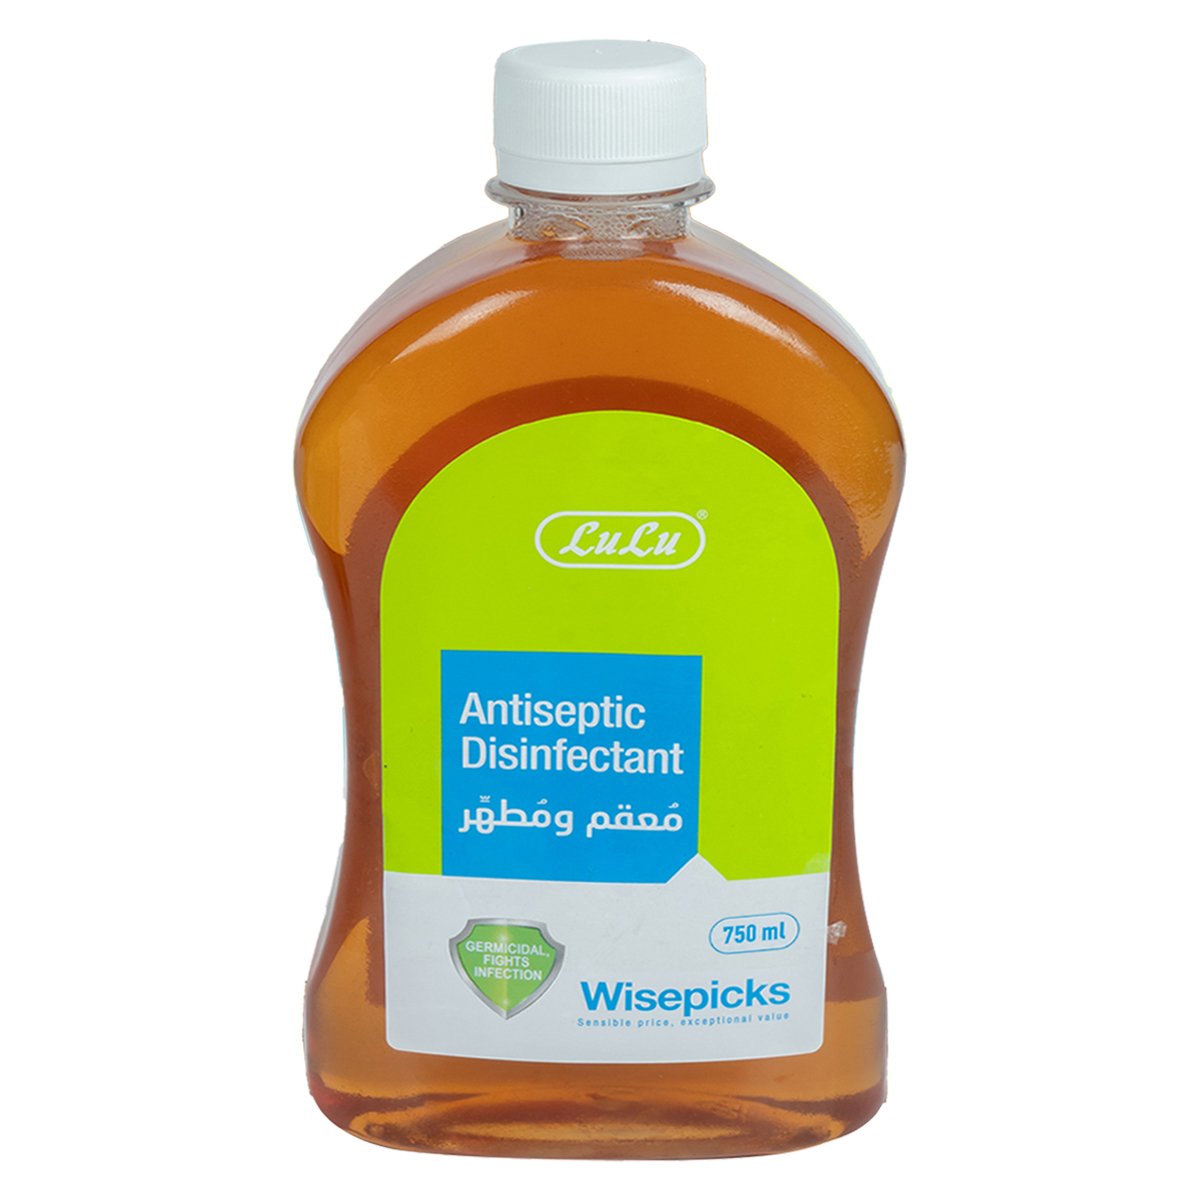 LuLu Wisepicks Antiseptic Disinfectant 2 x 750 ml + 500 ml